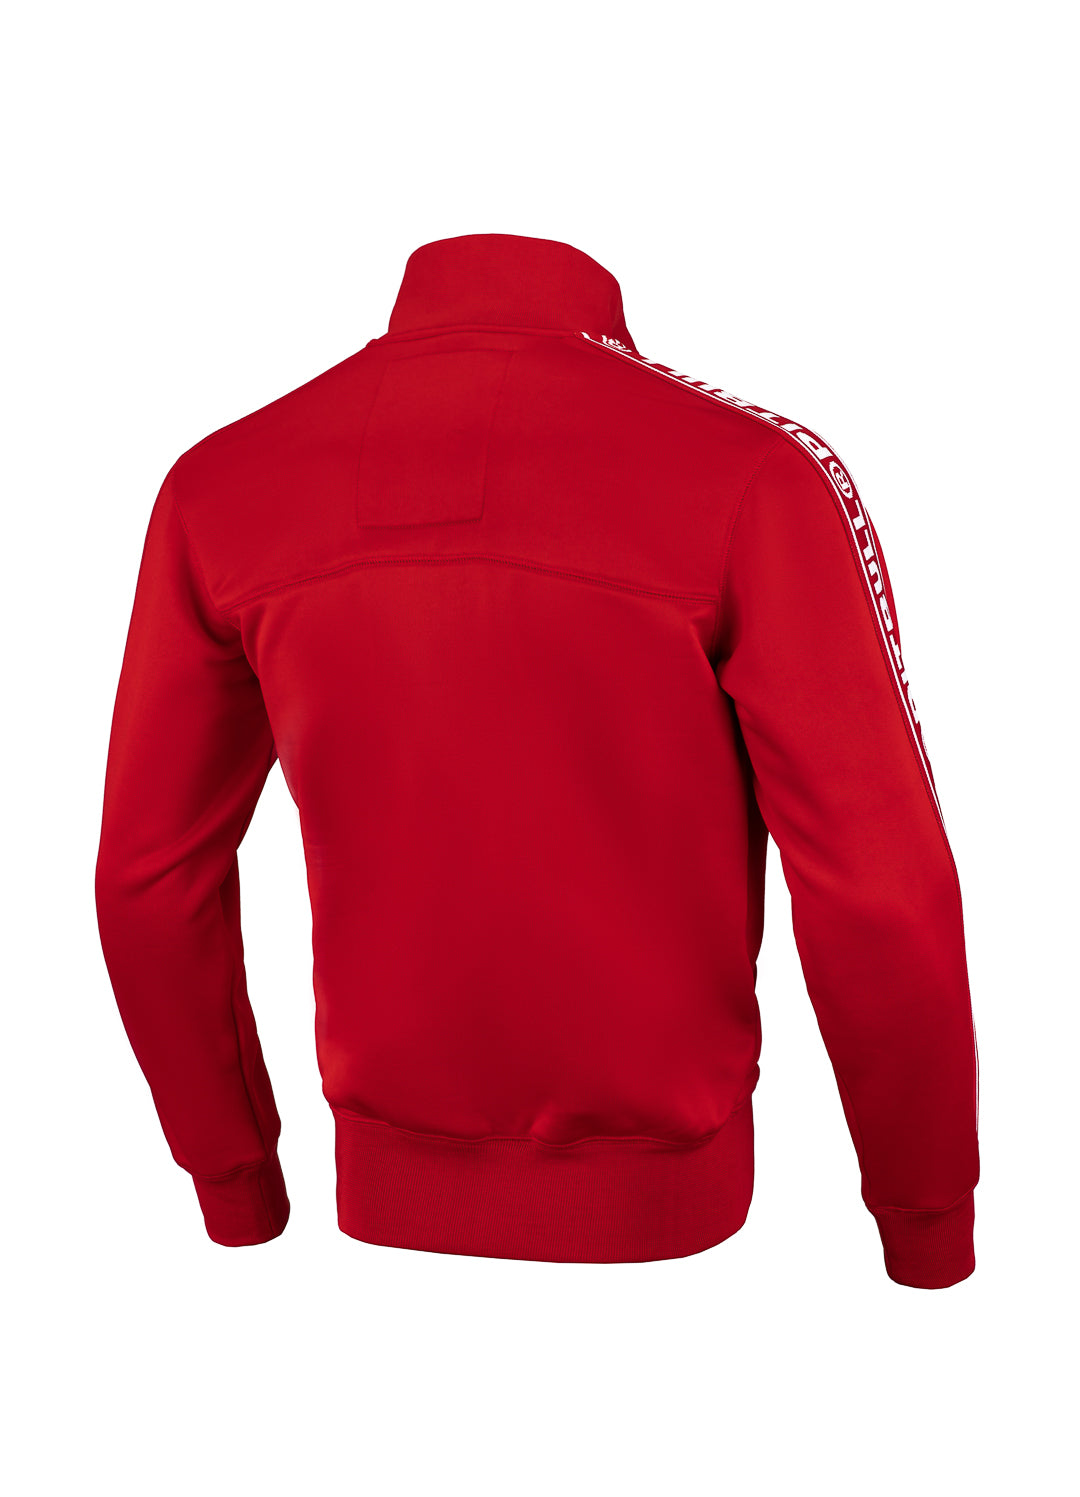 TAPE LOGO Red Zip Sweatshirt - Pitbull West Coast International Store 